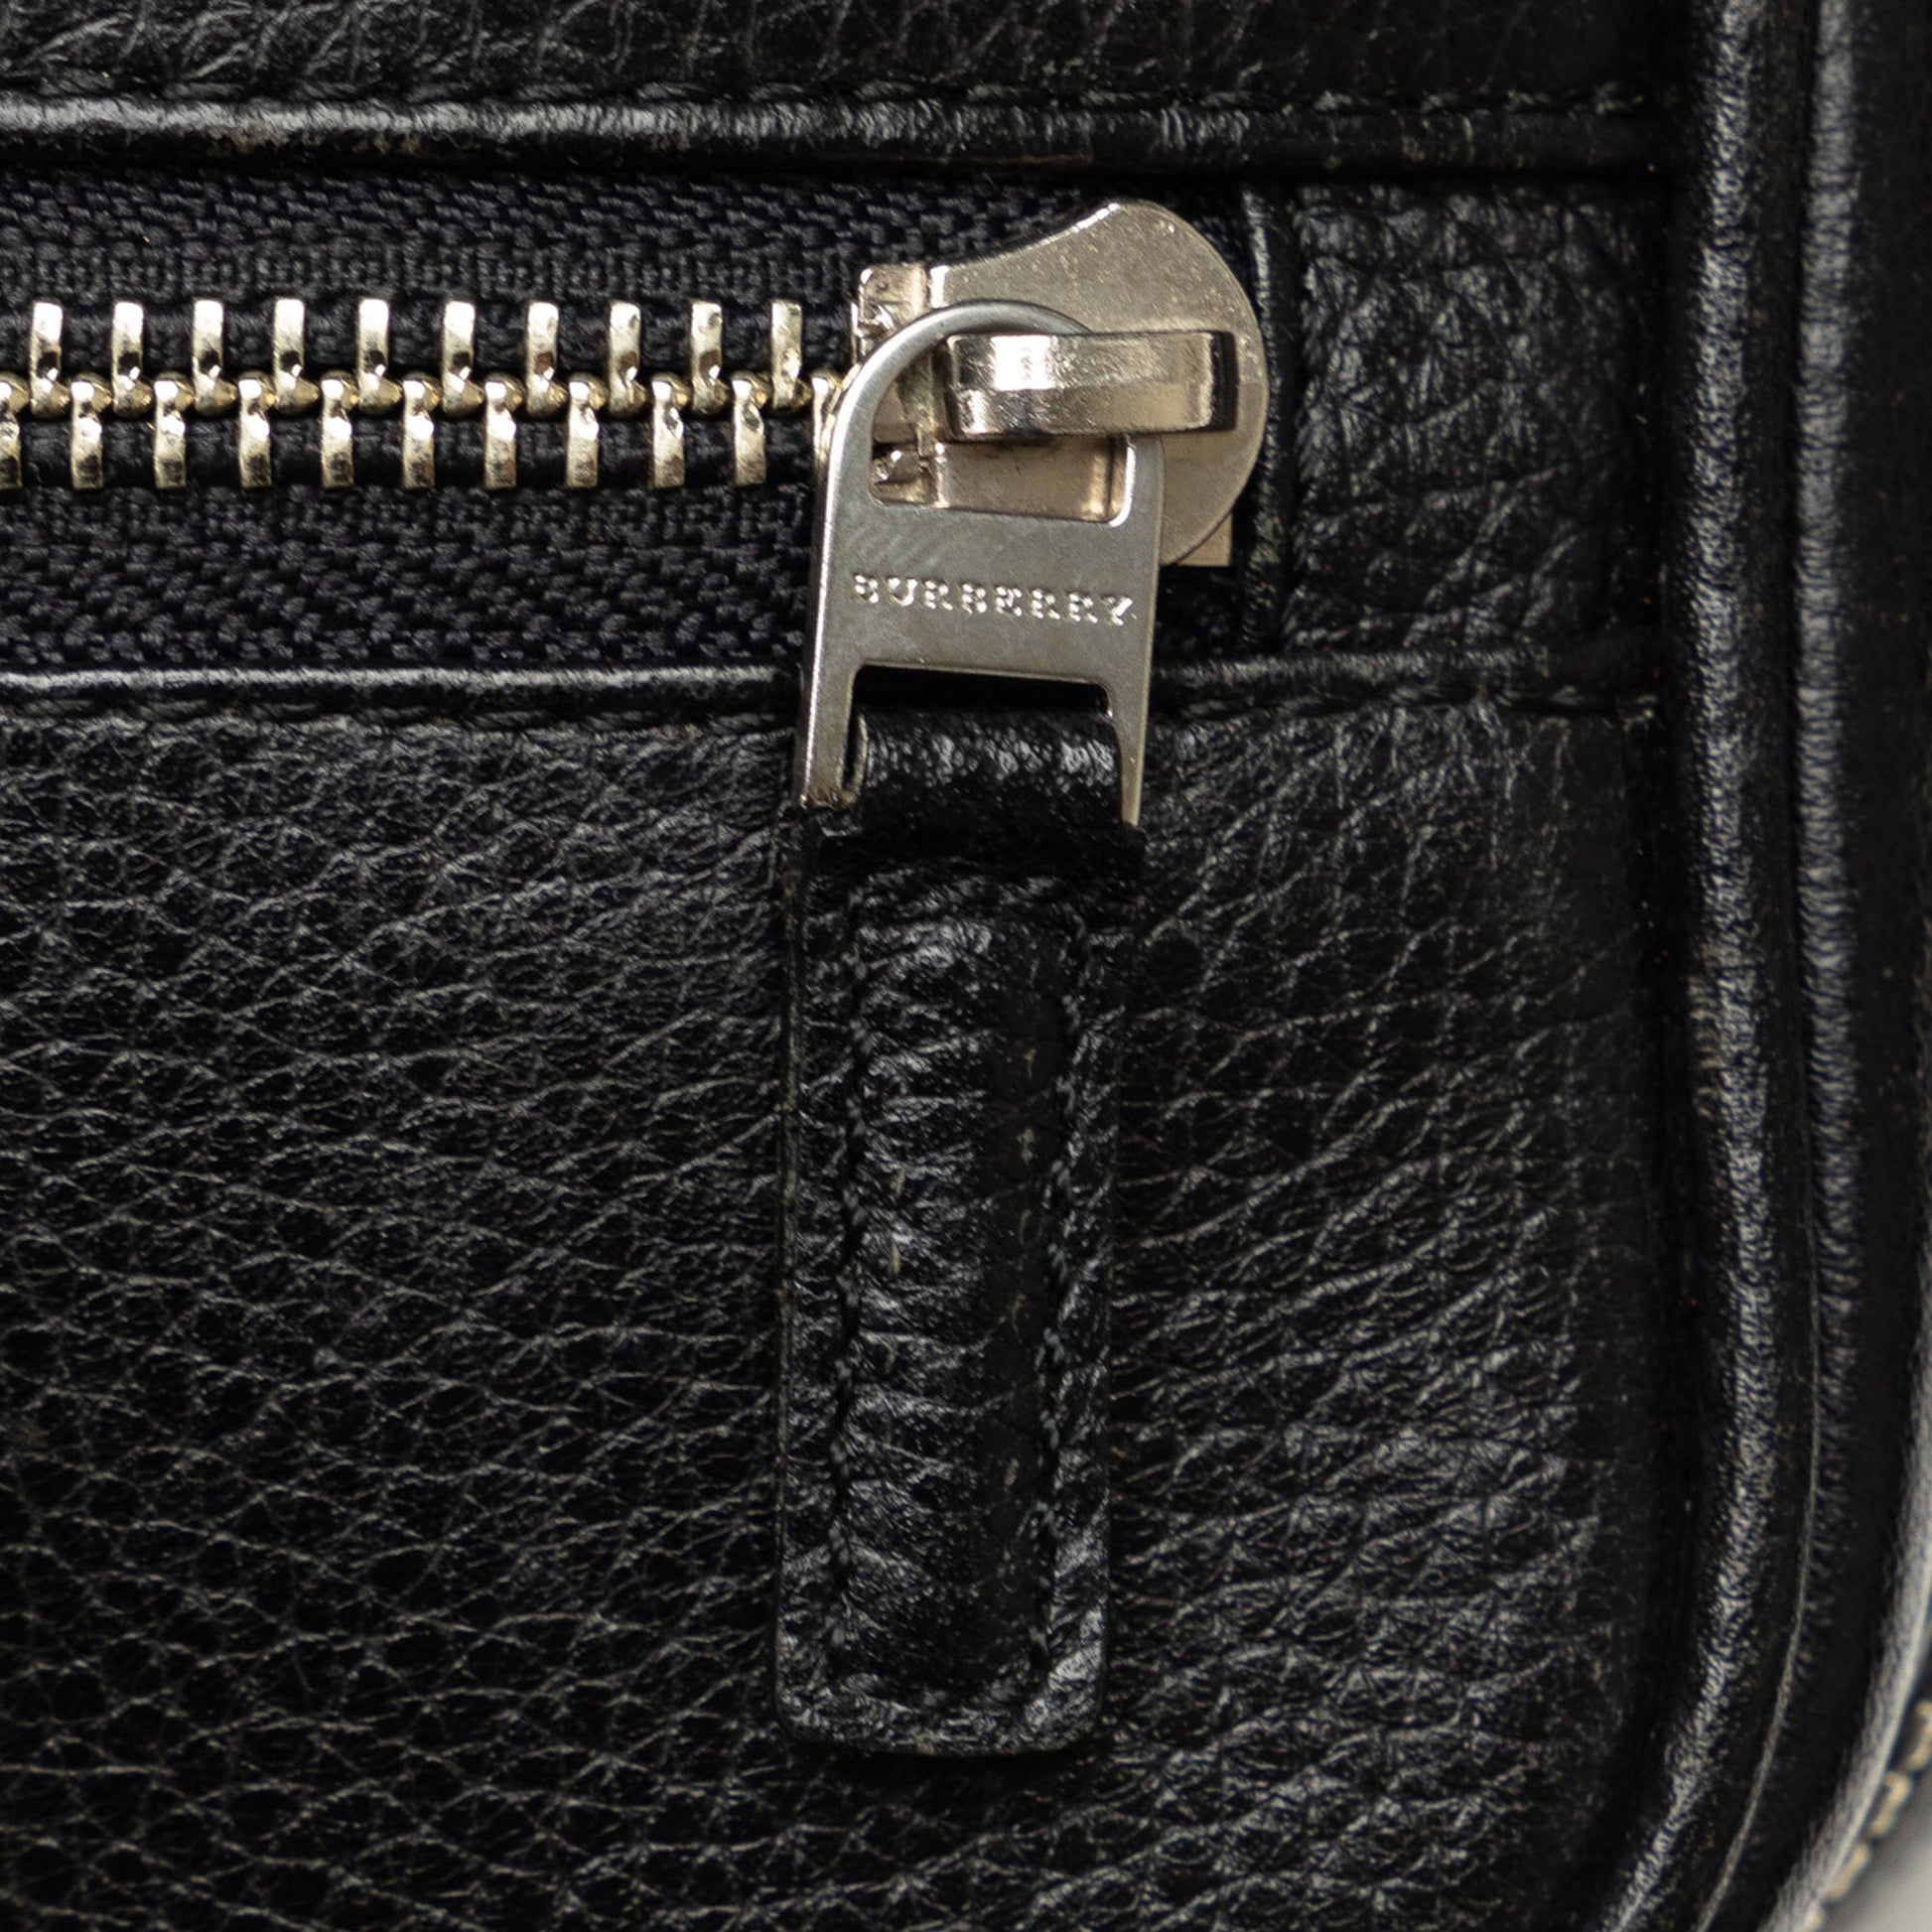 Leather Crossbody Bag Black - Gaby Paris